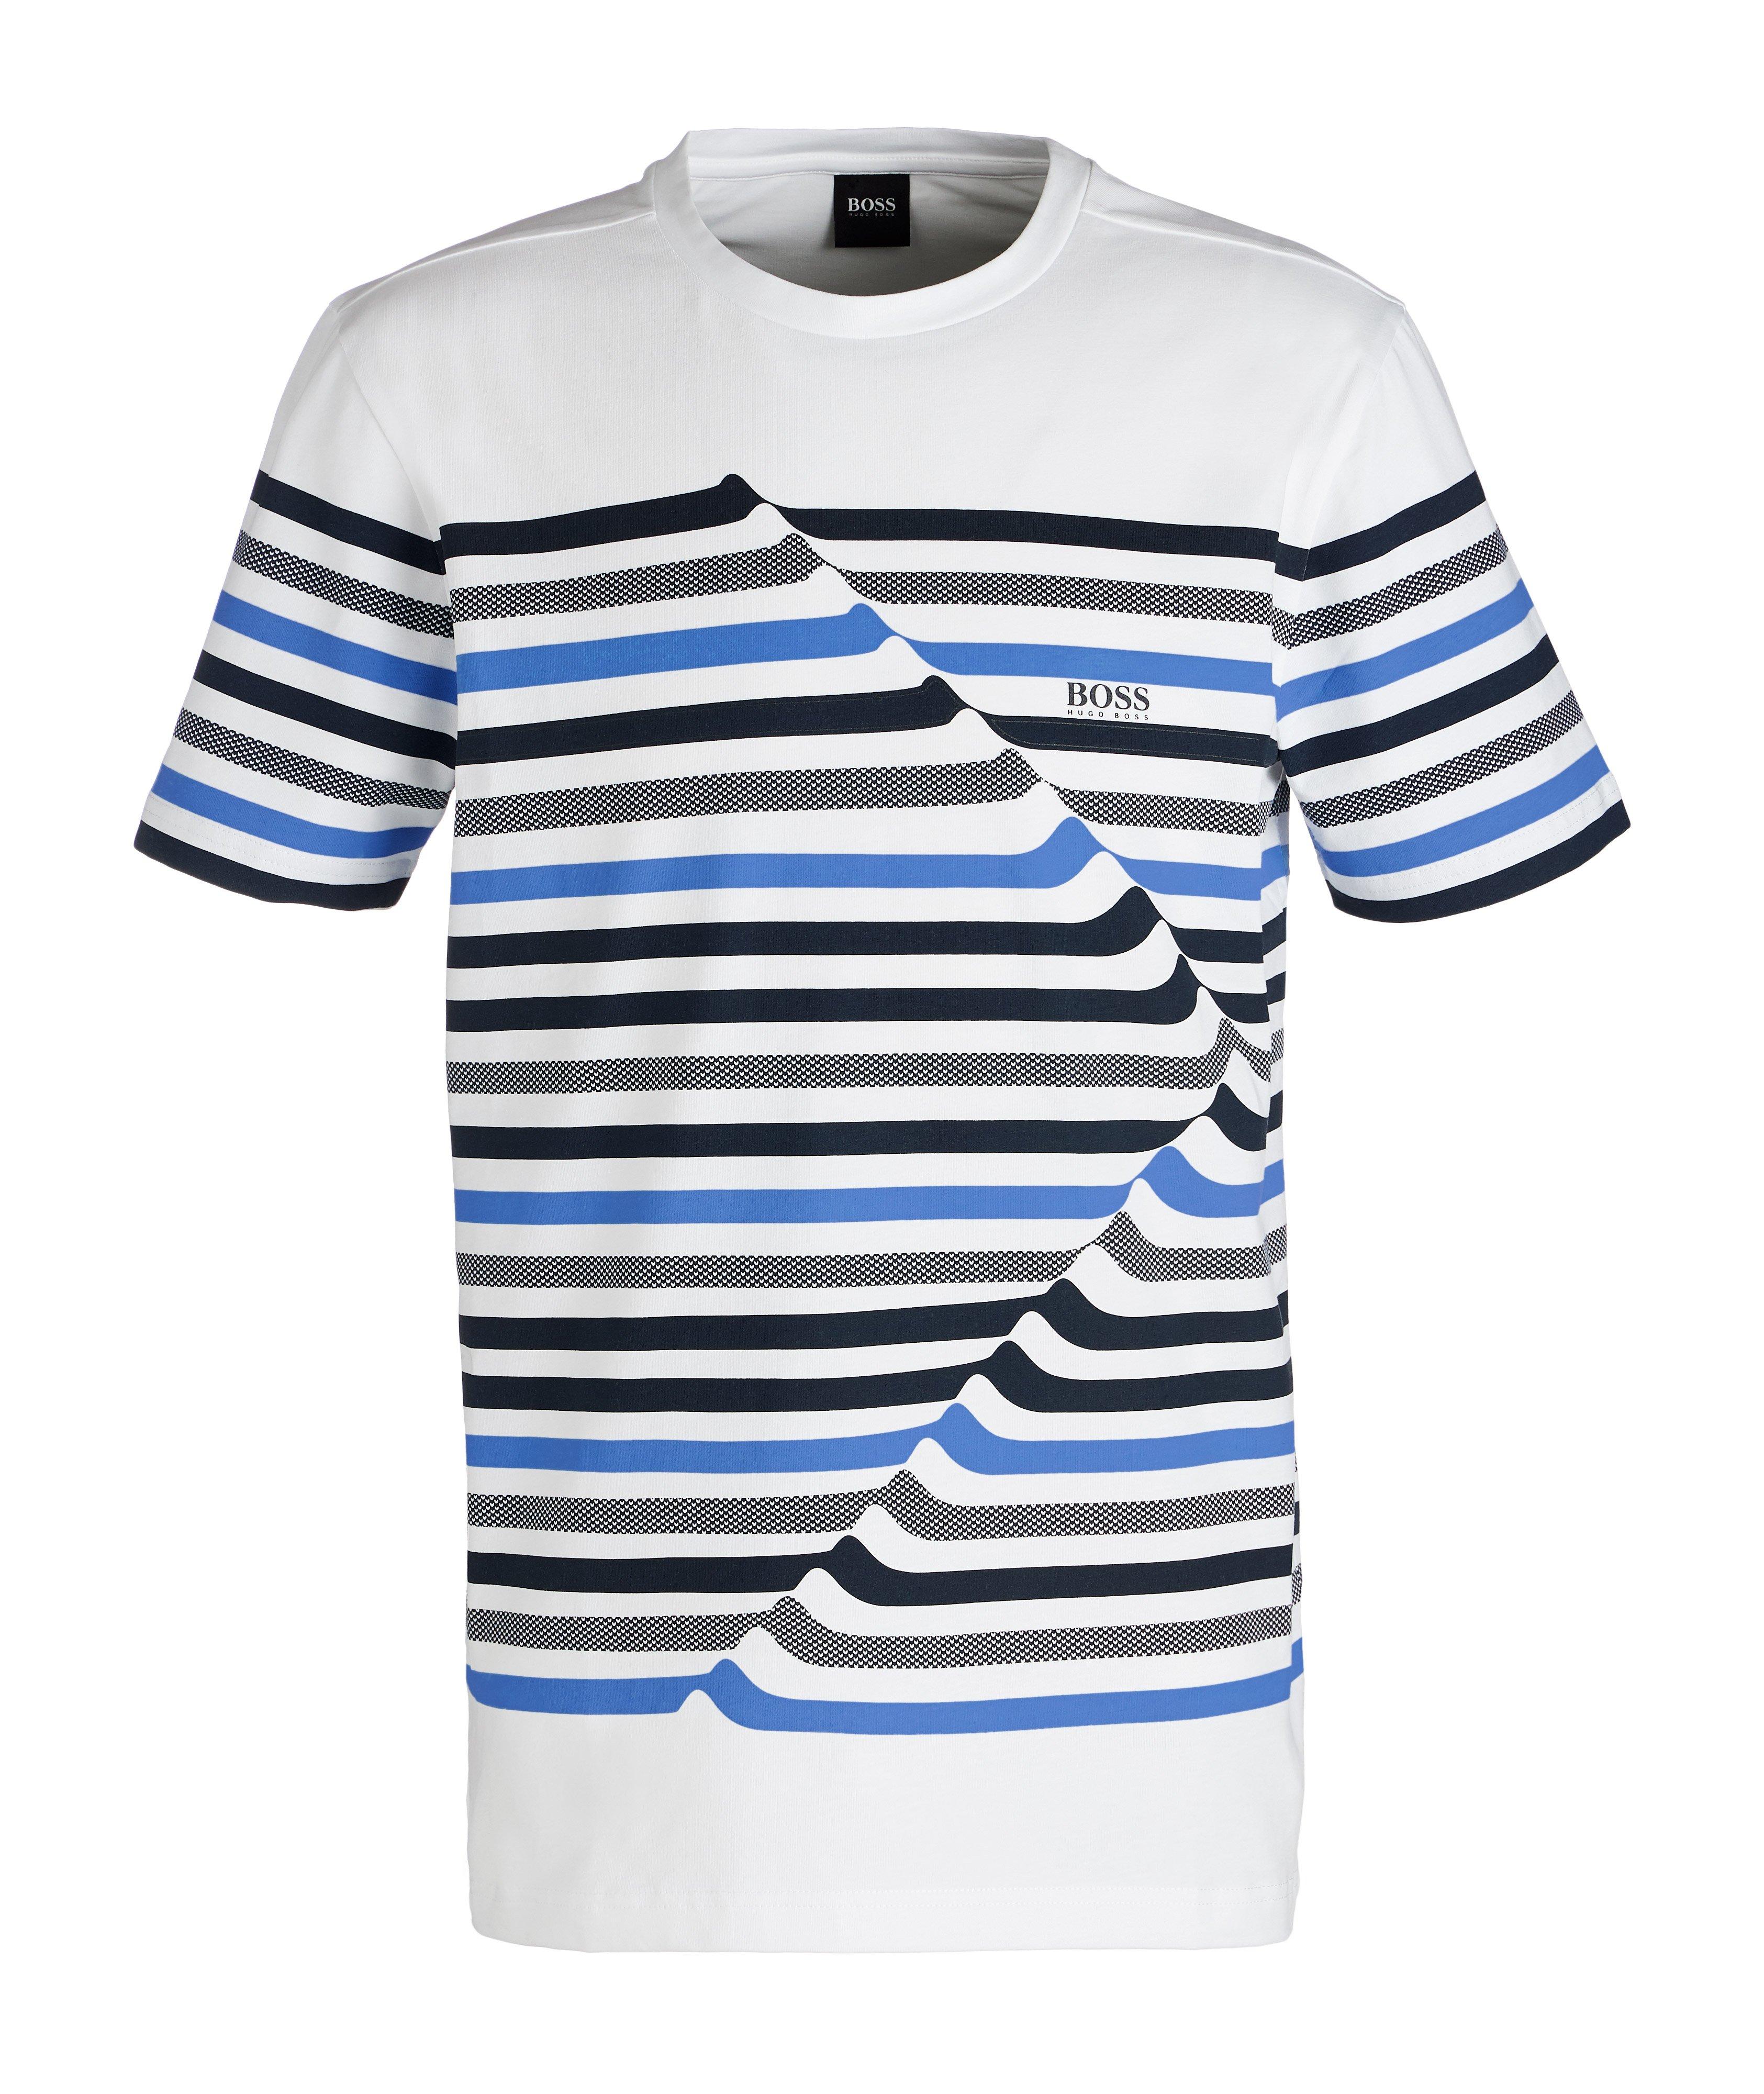 Striped Cotton Blend T-Shirt image 0